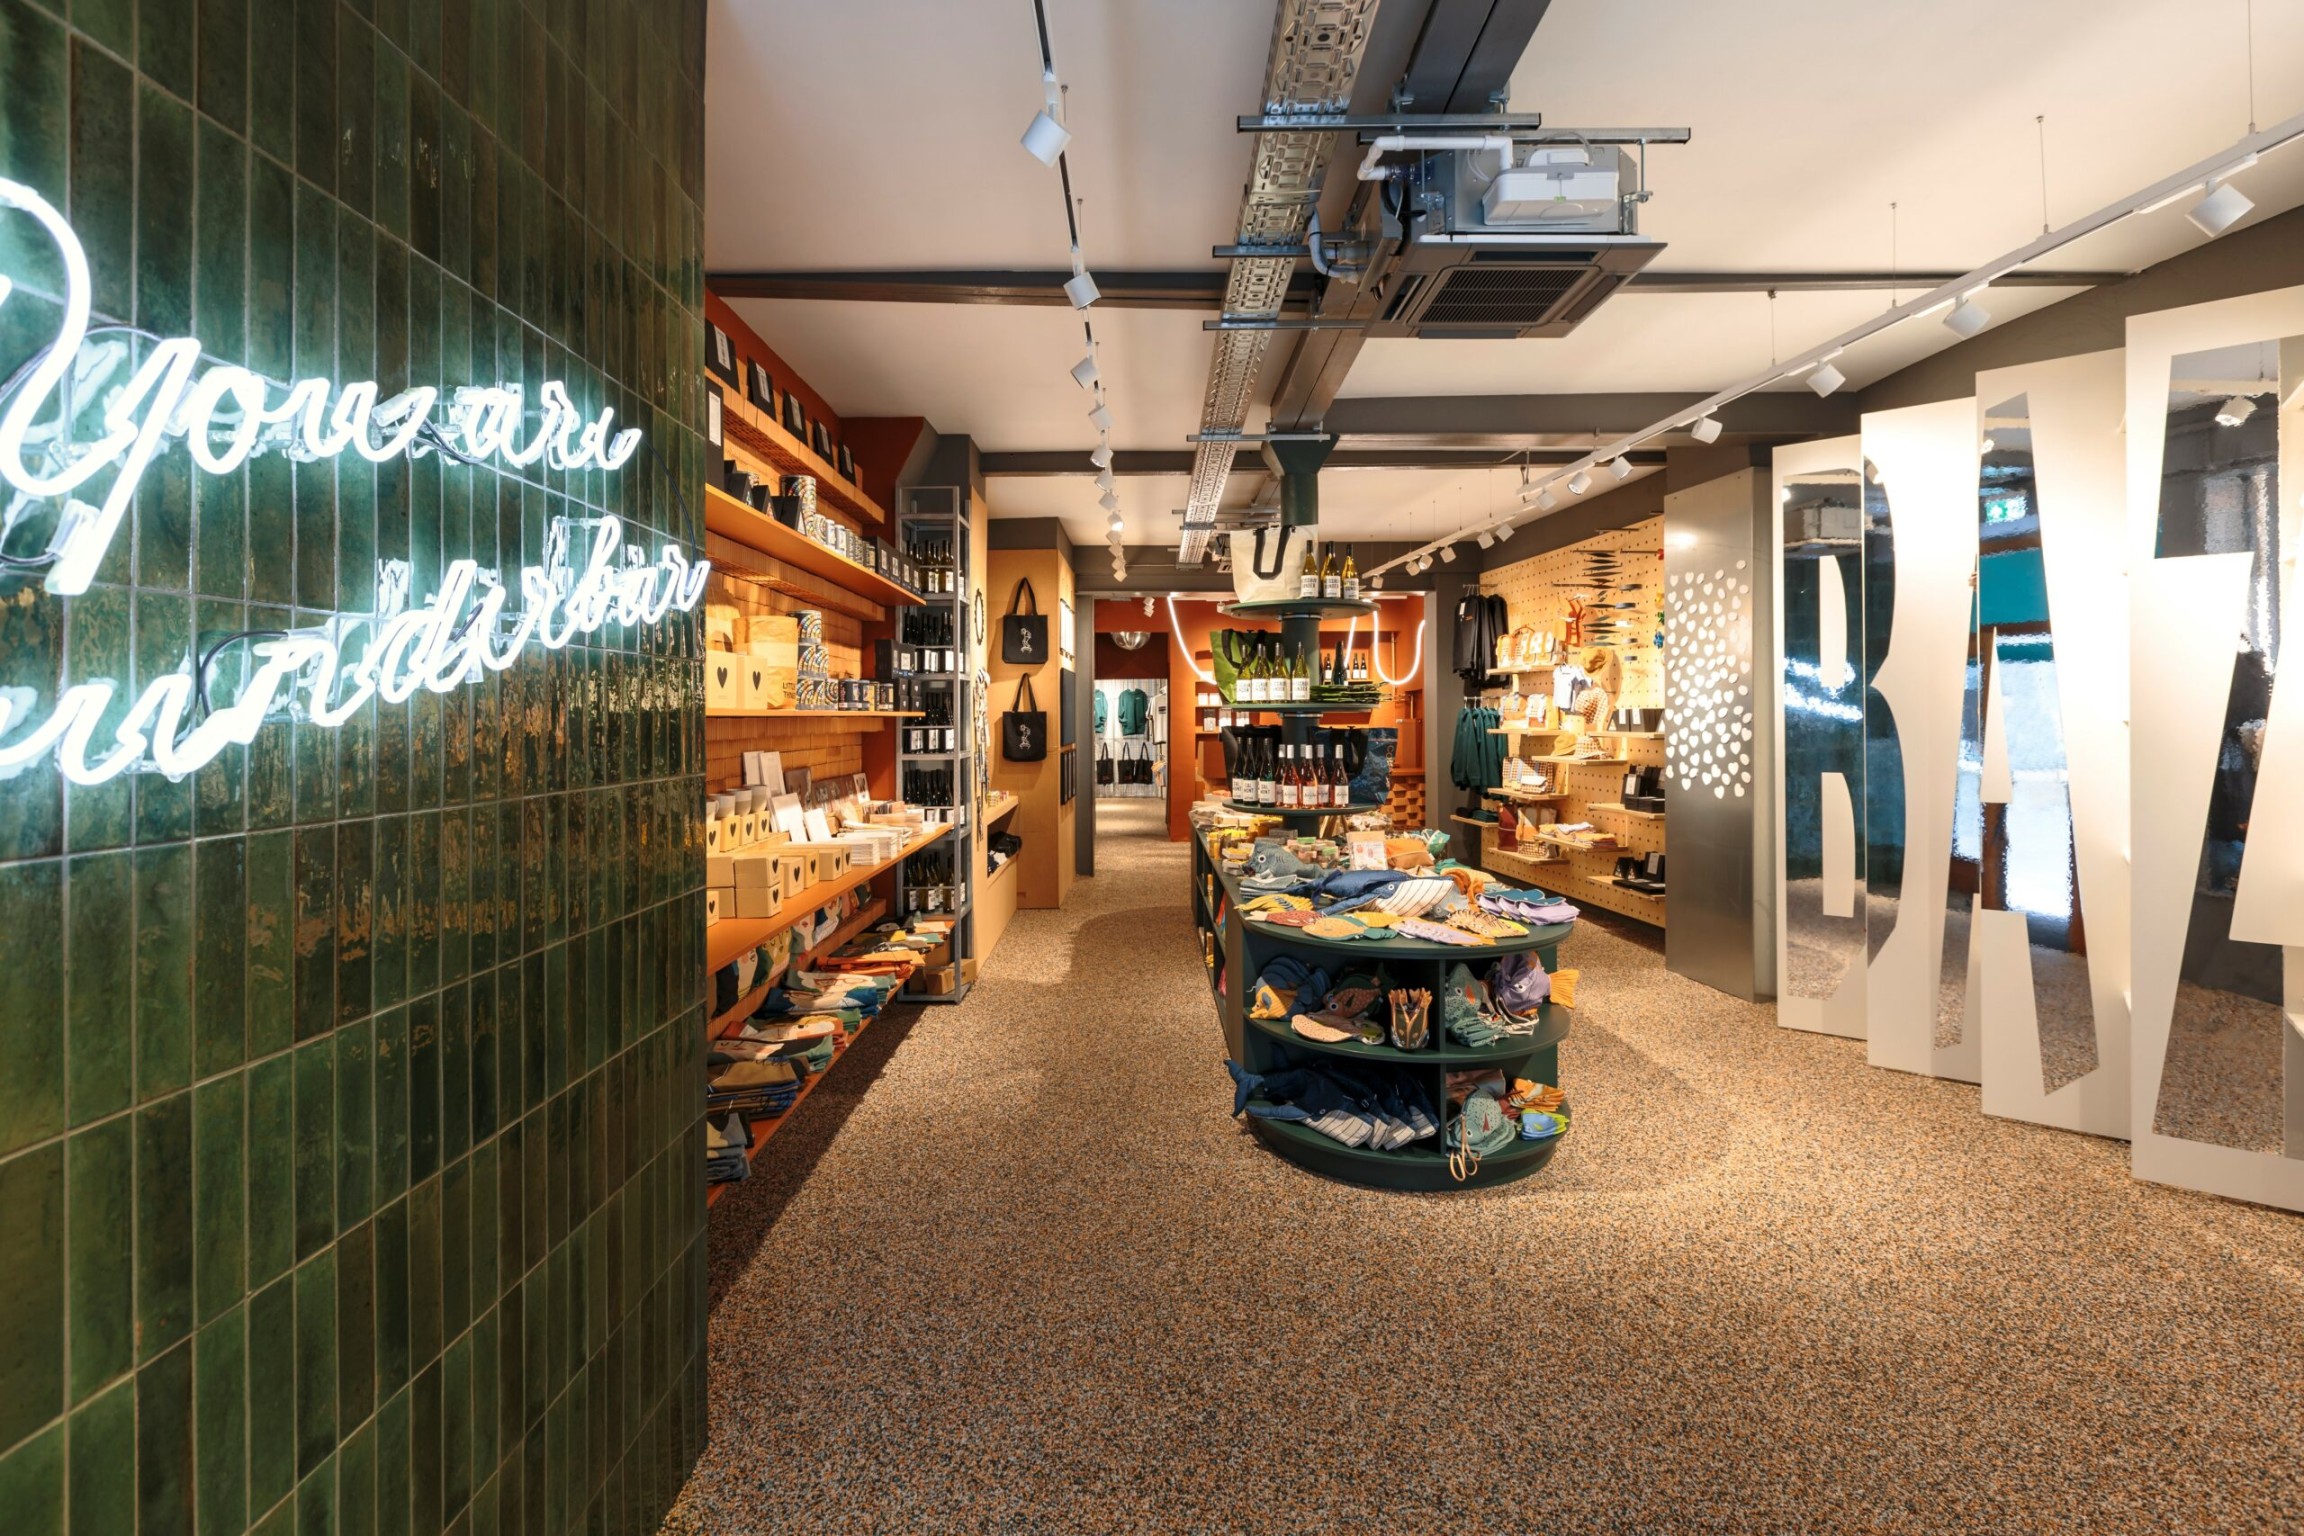 Der Bazaar of Wunderbar öffnet in Koblenz - Koblenz-Stadtmarketing